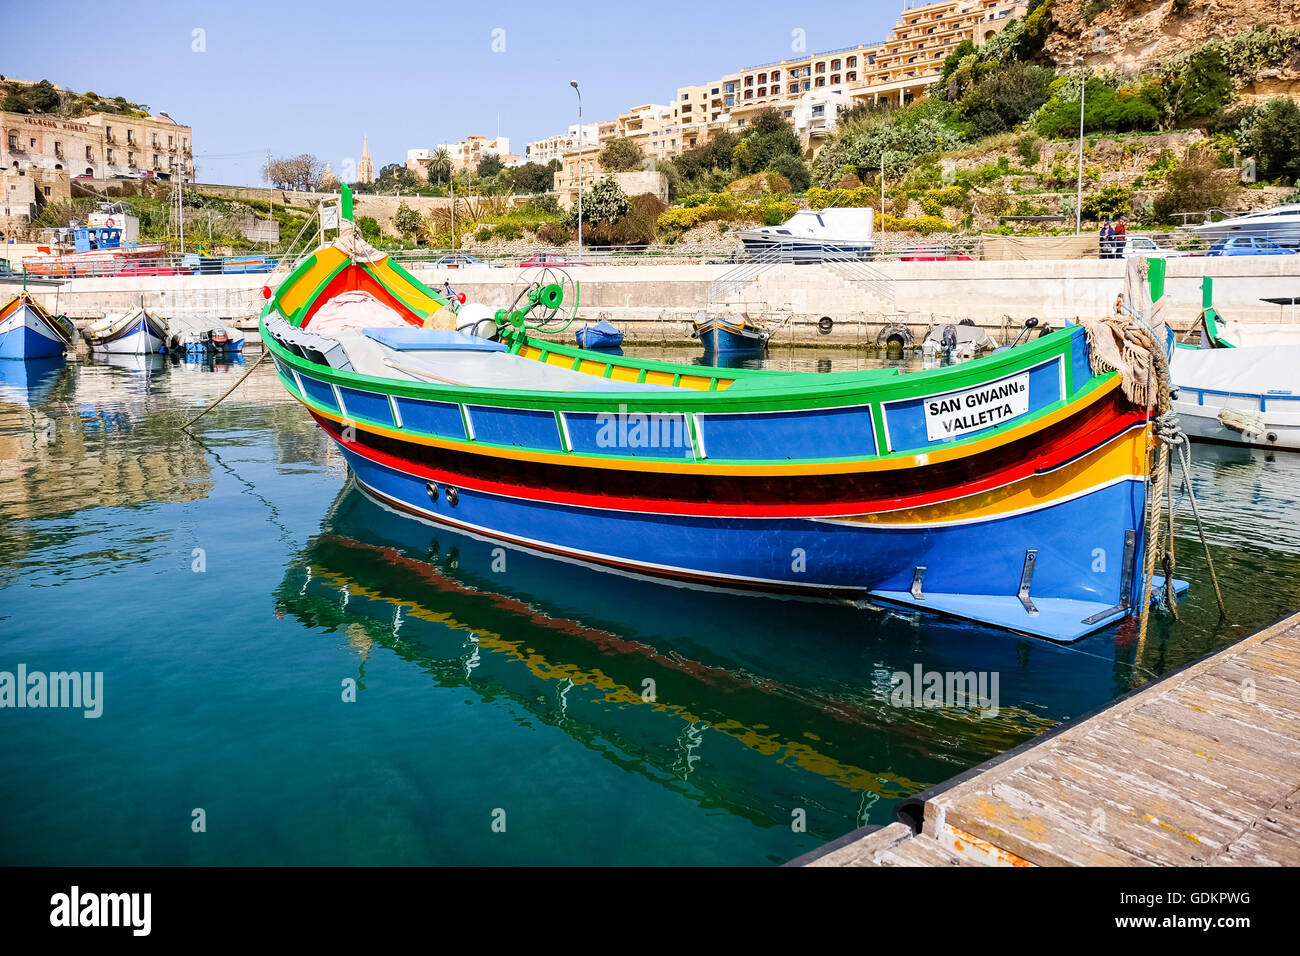 MGARR, GOZO ISLAND, îles de Malte - 17 avril, 2015:Marsaxlokk, village traditionnel maltais un bateau de pêche, Mgarr Gozo, Malte Banque D'Images